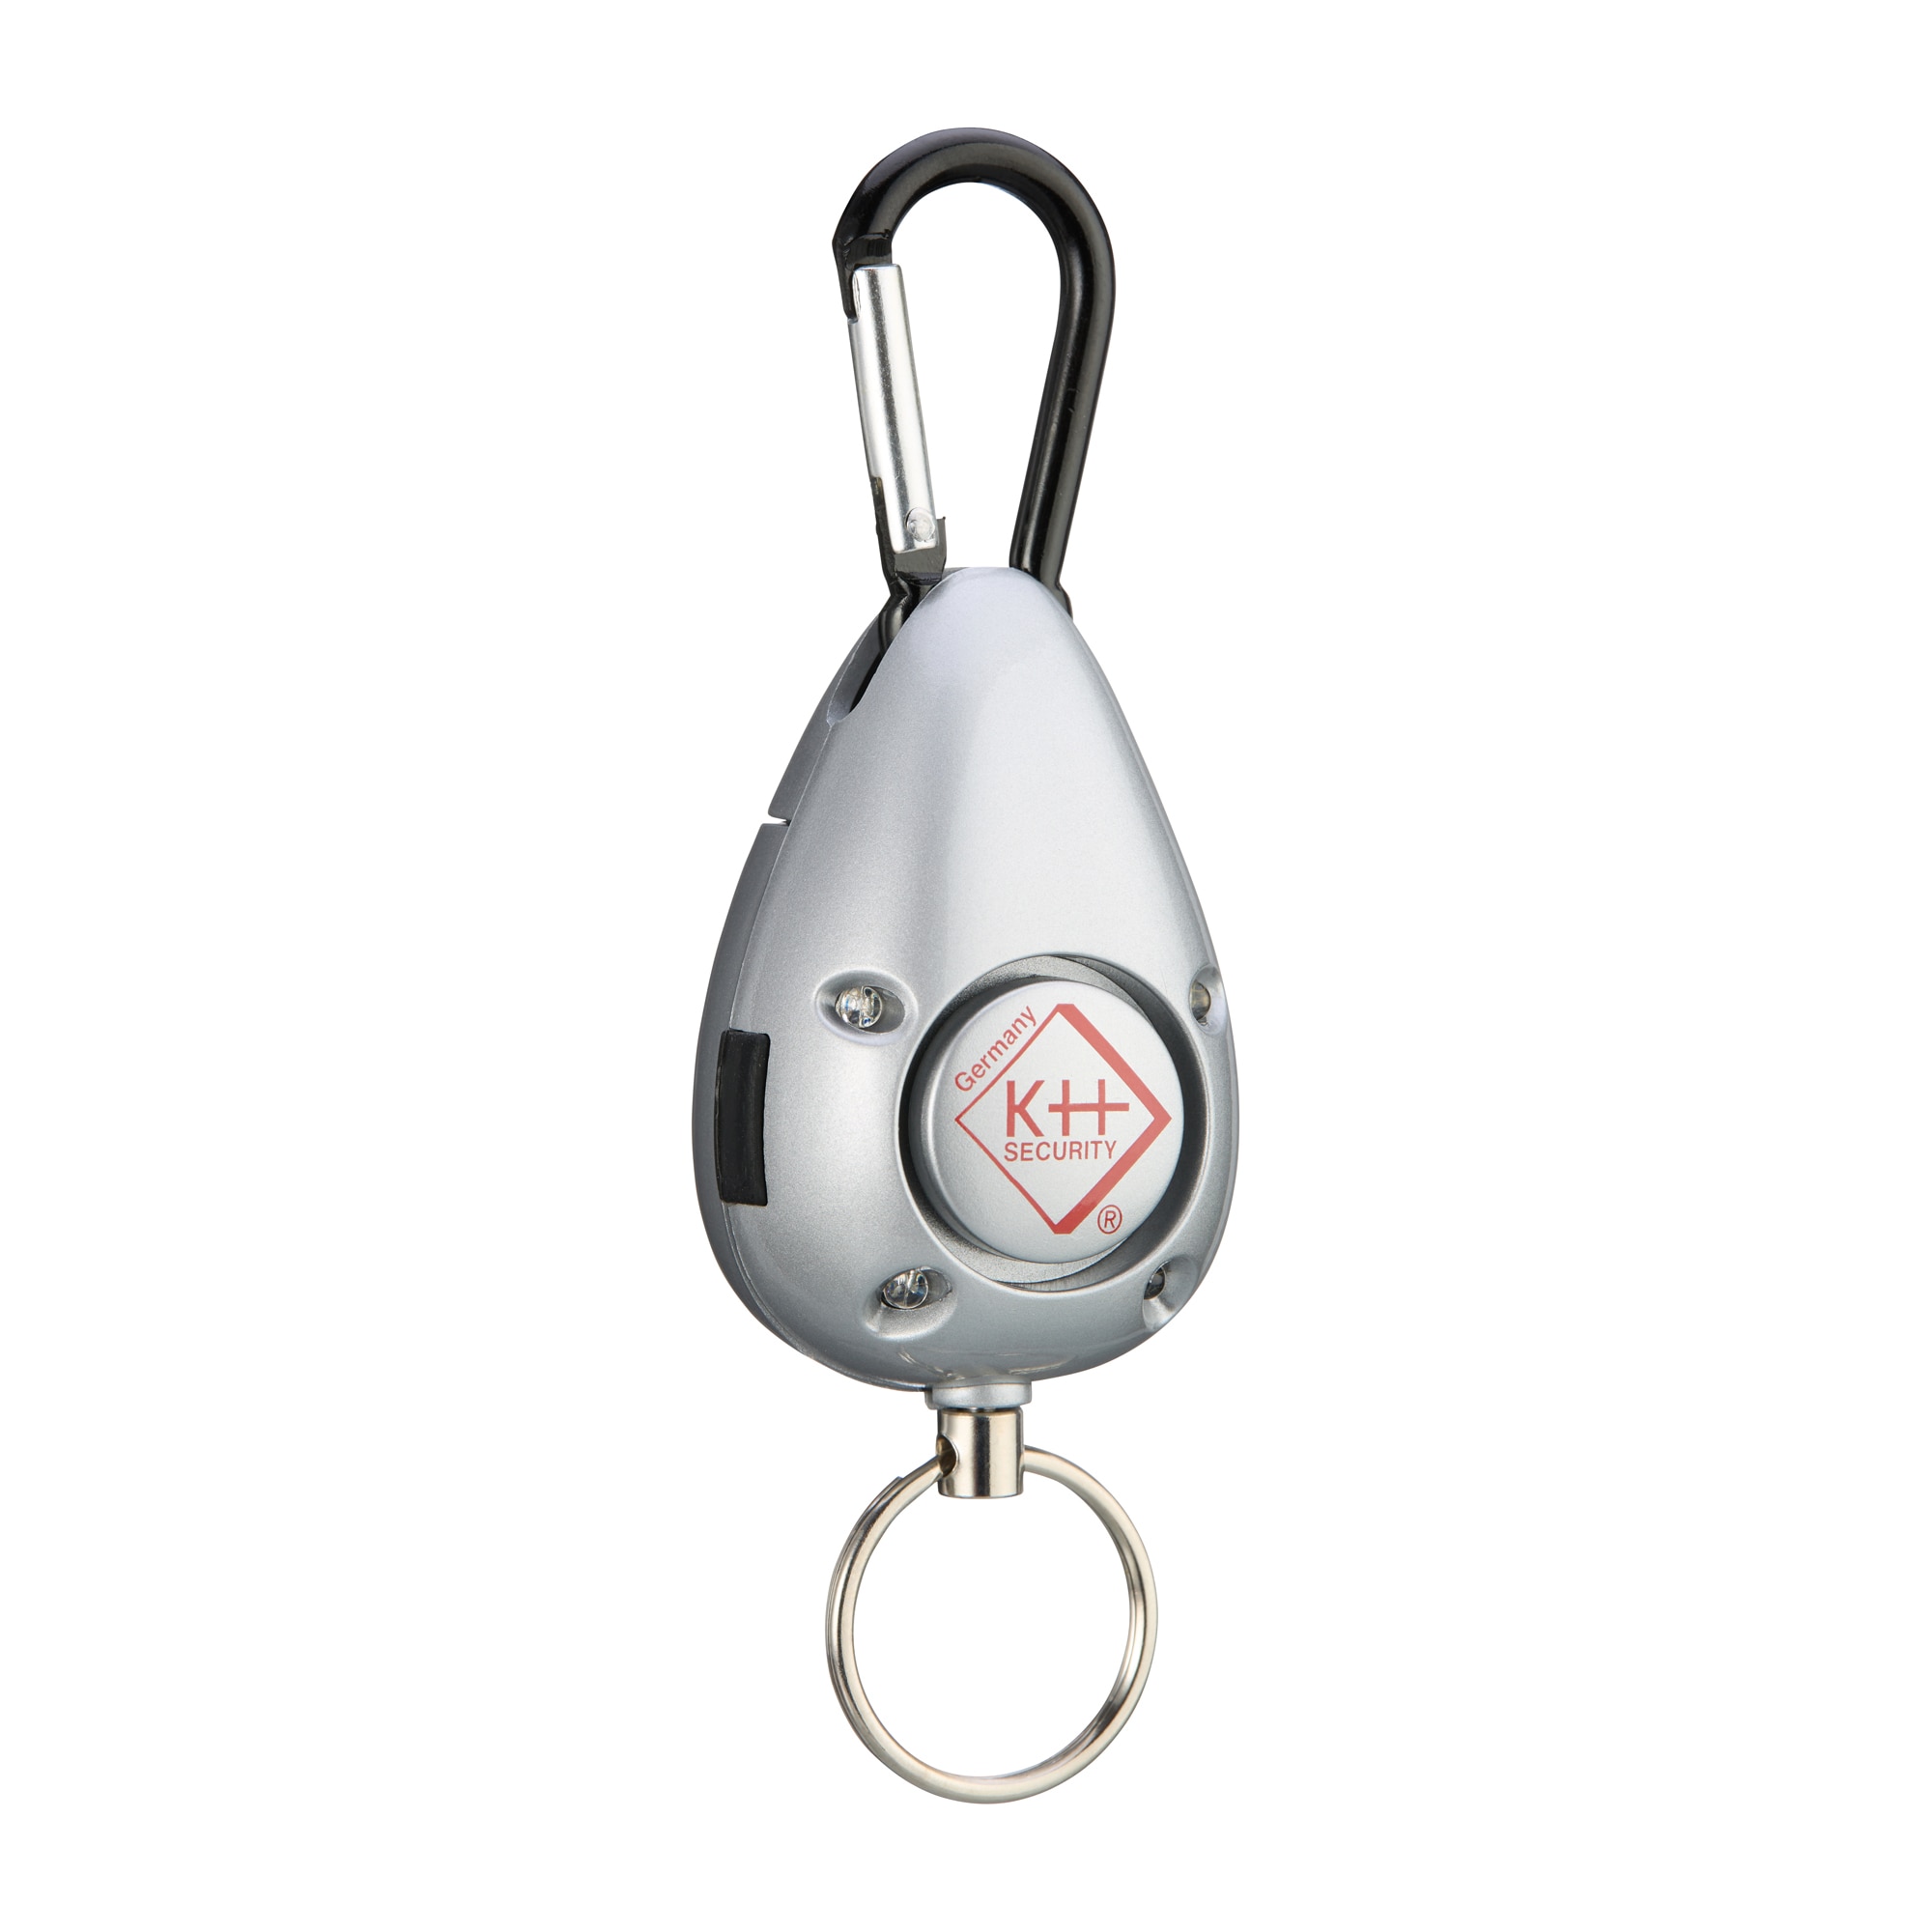 KH-Security Outdoor Alarm silver